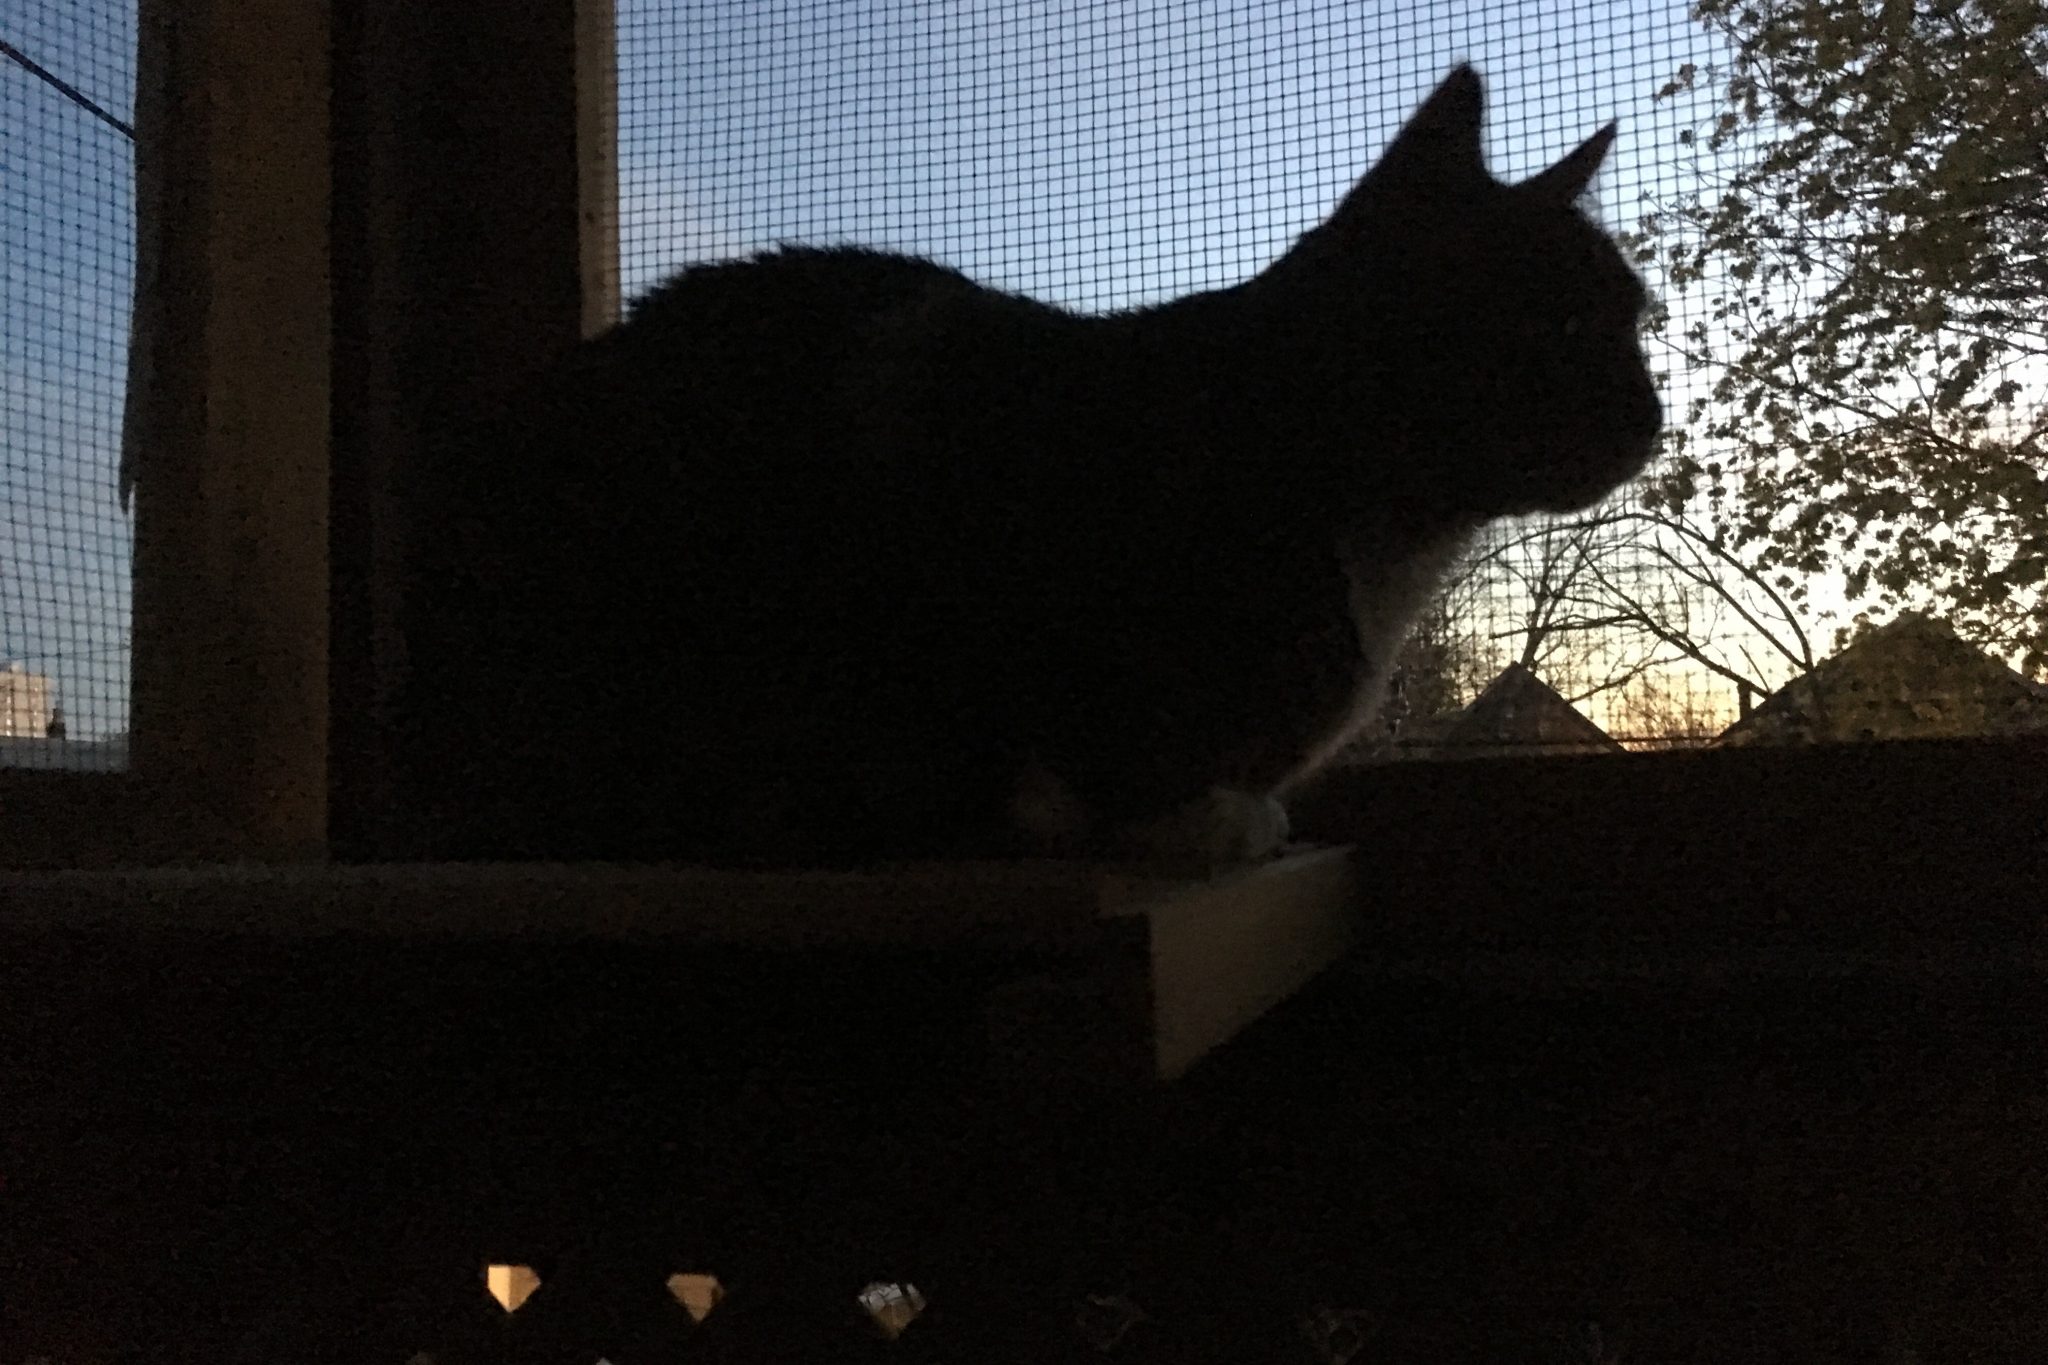 Cat silhouette on catio